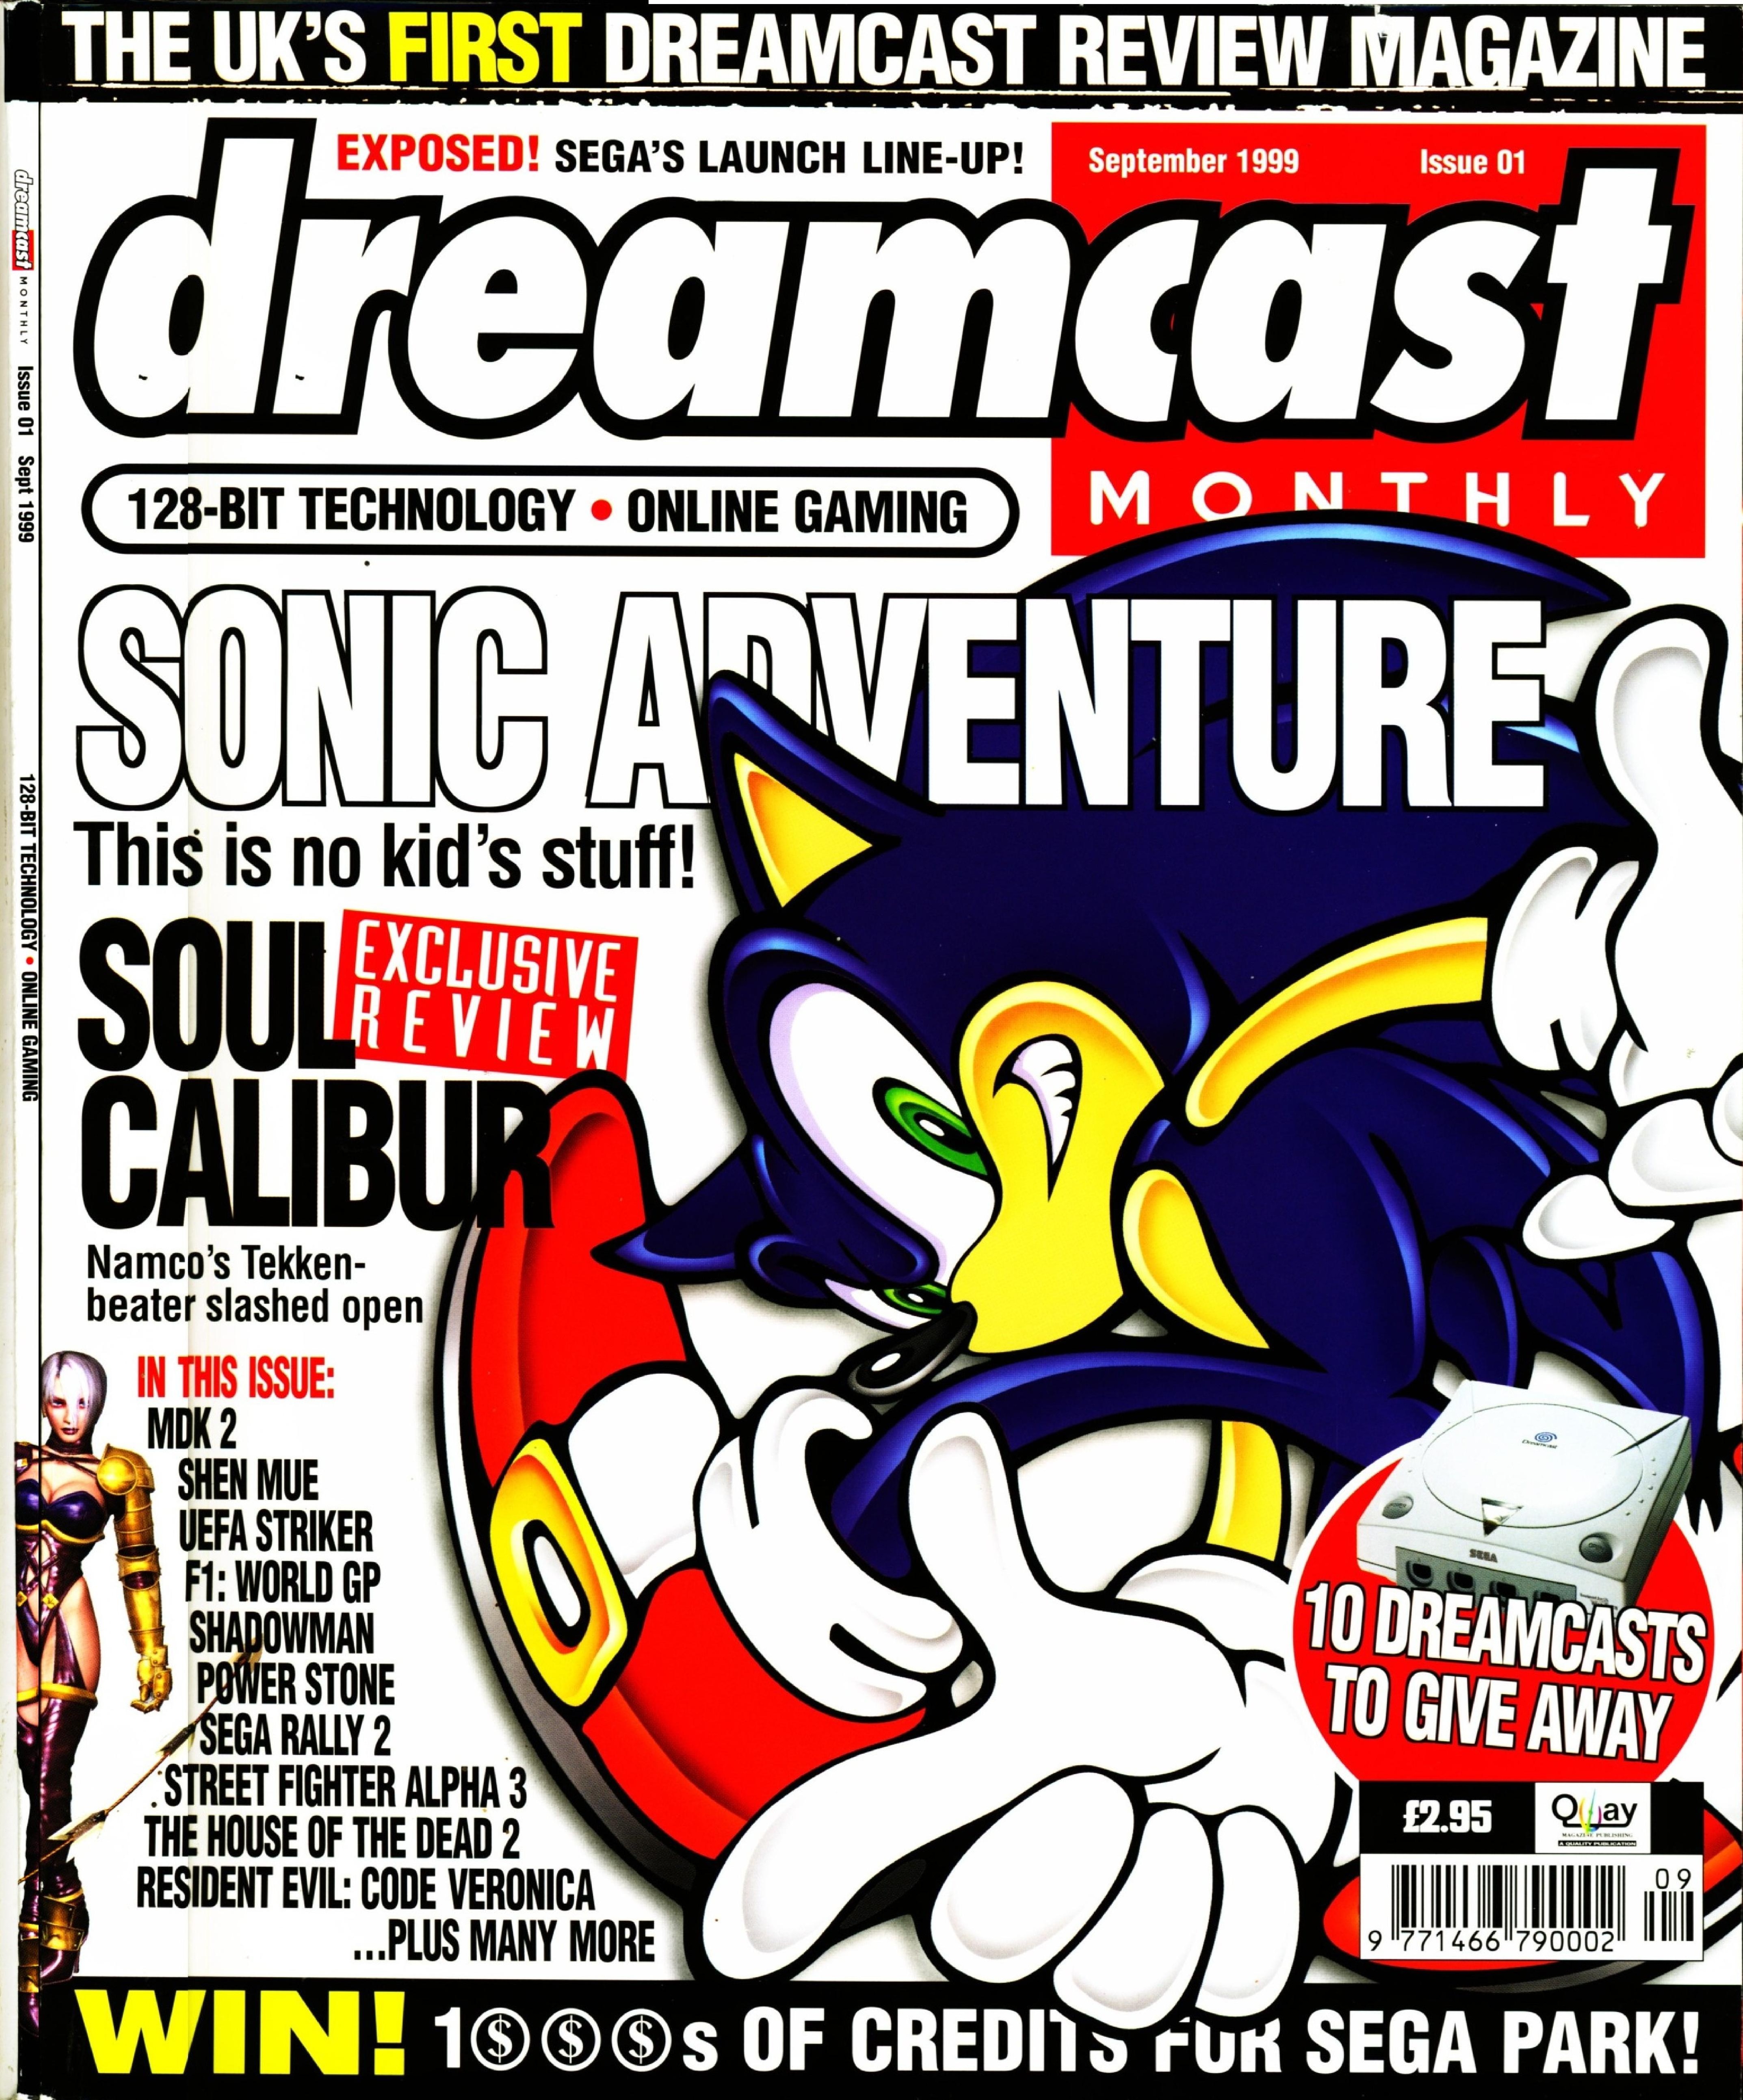 DreamcastMonthly UK 01.pdf